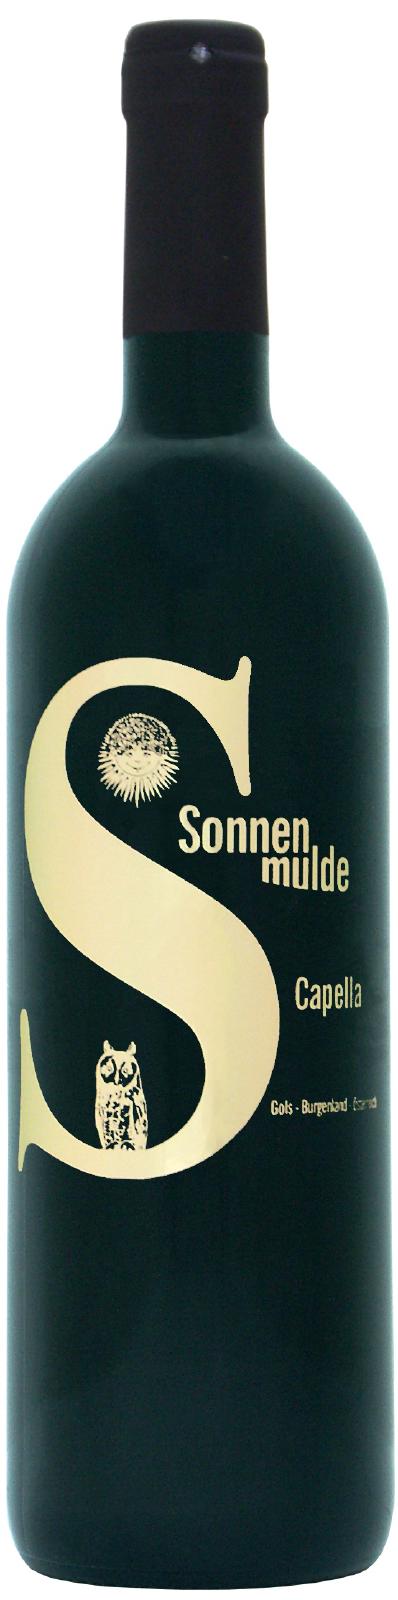 A bottle of Capella